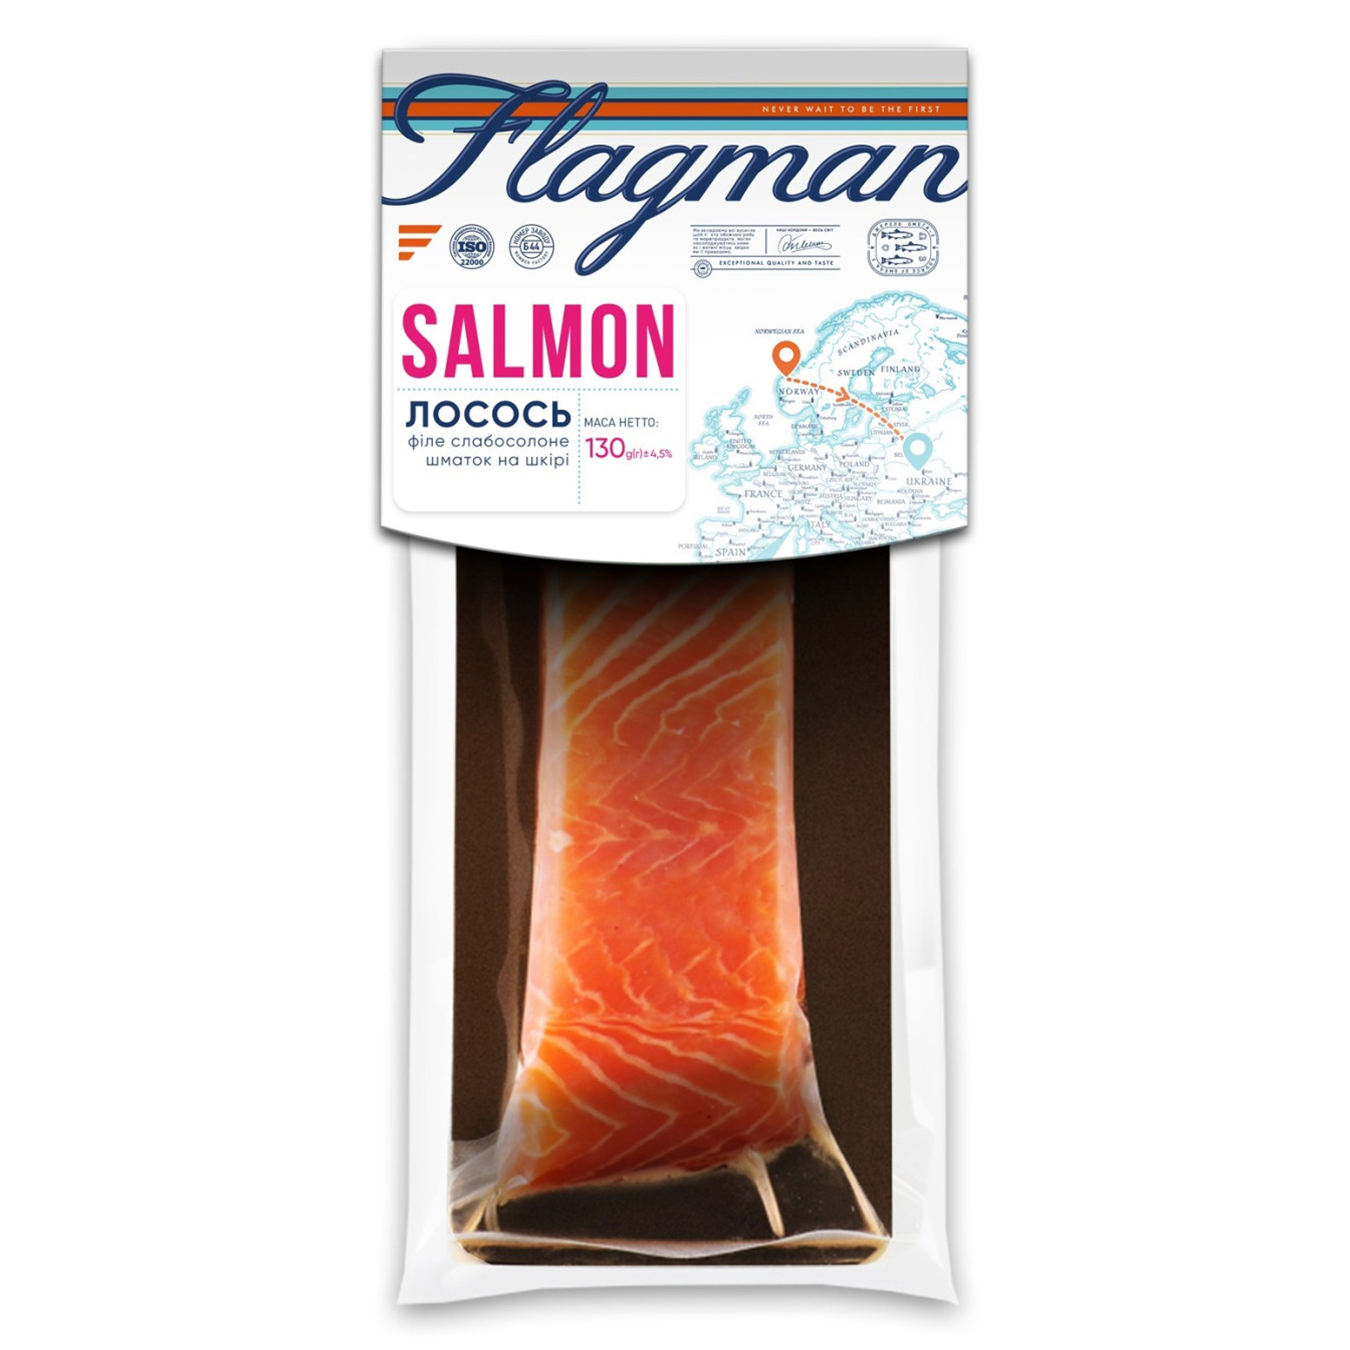 Flagman salmon fillet piece lightly salted 130g 2